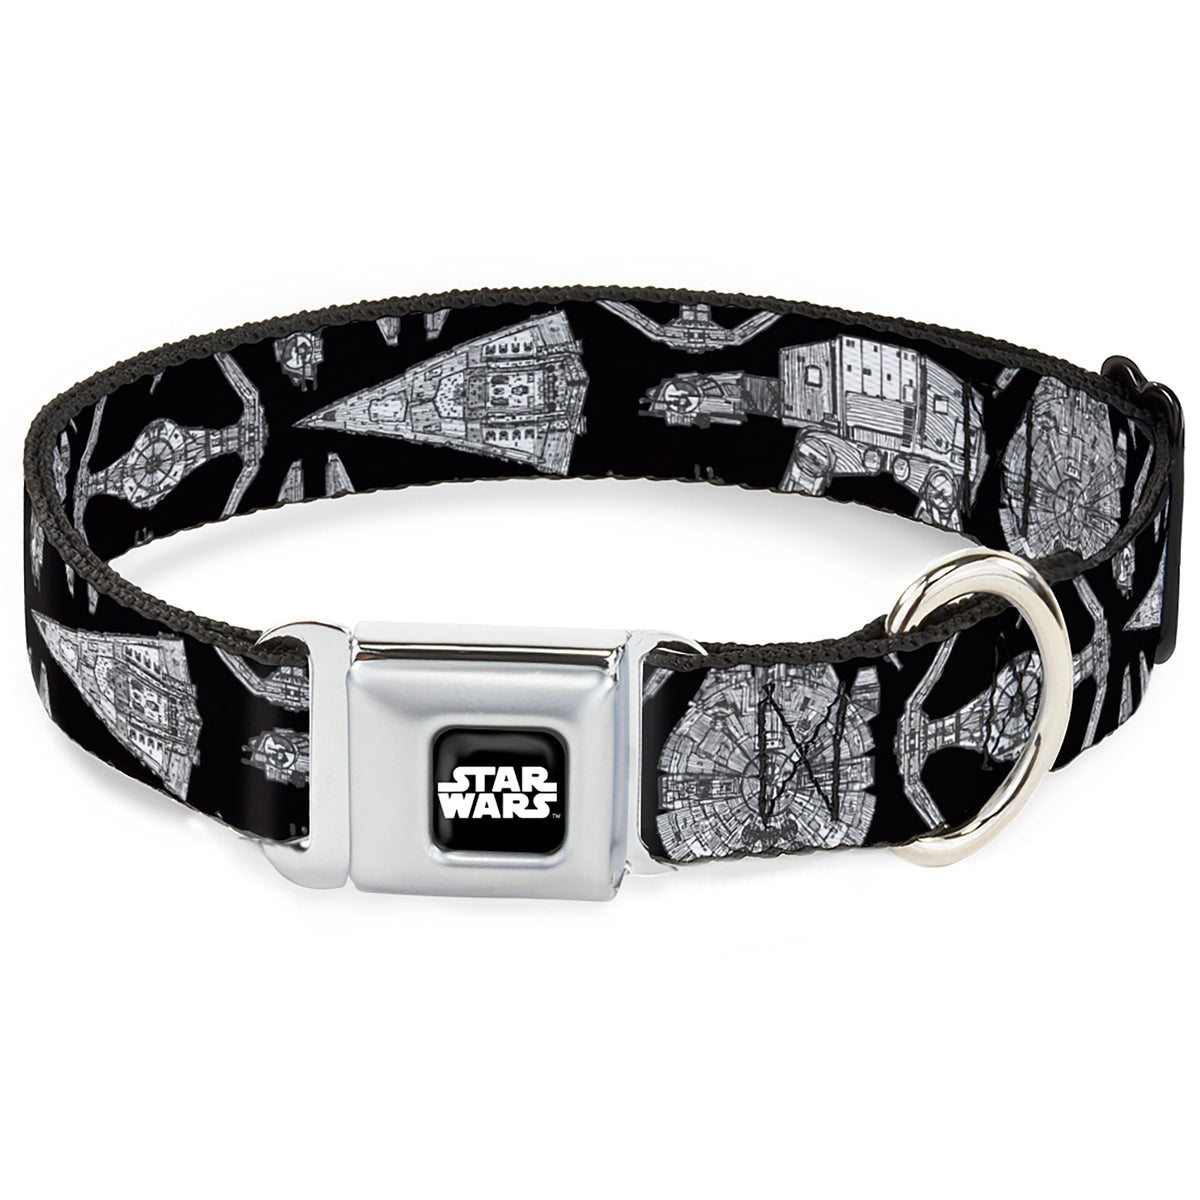 STAR WARS Logo Full Color Black/White Seatbelt Buckle Collar - Star Wars Ships and Vehicles Black/Grays